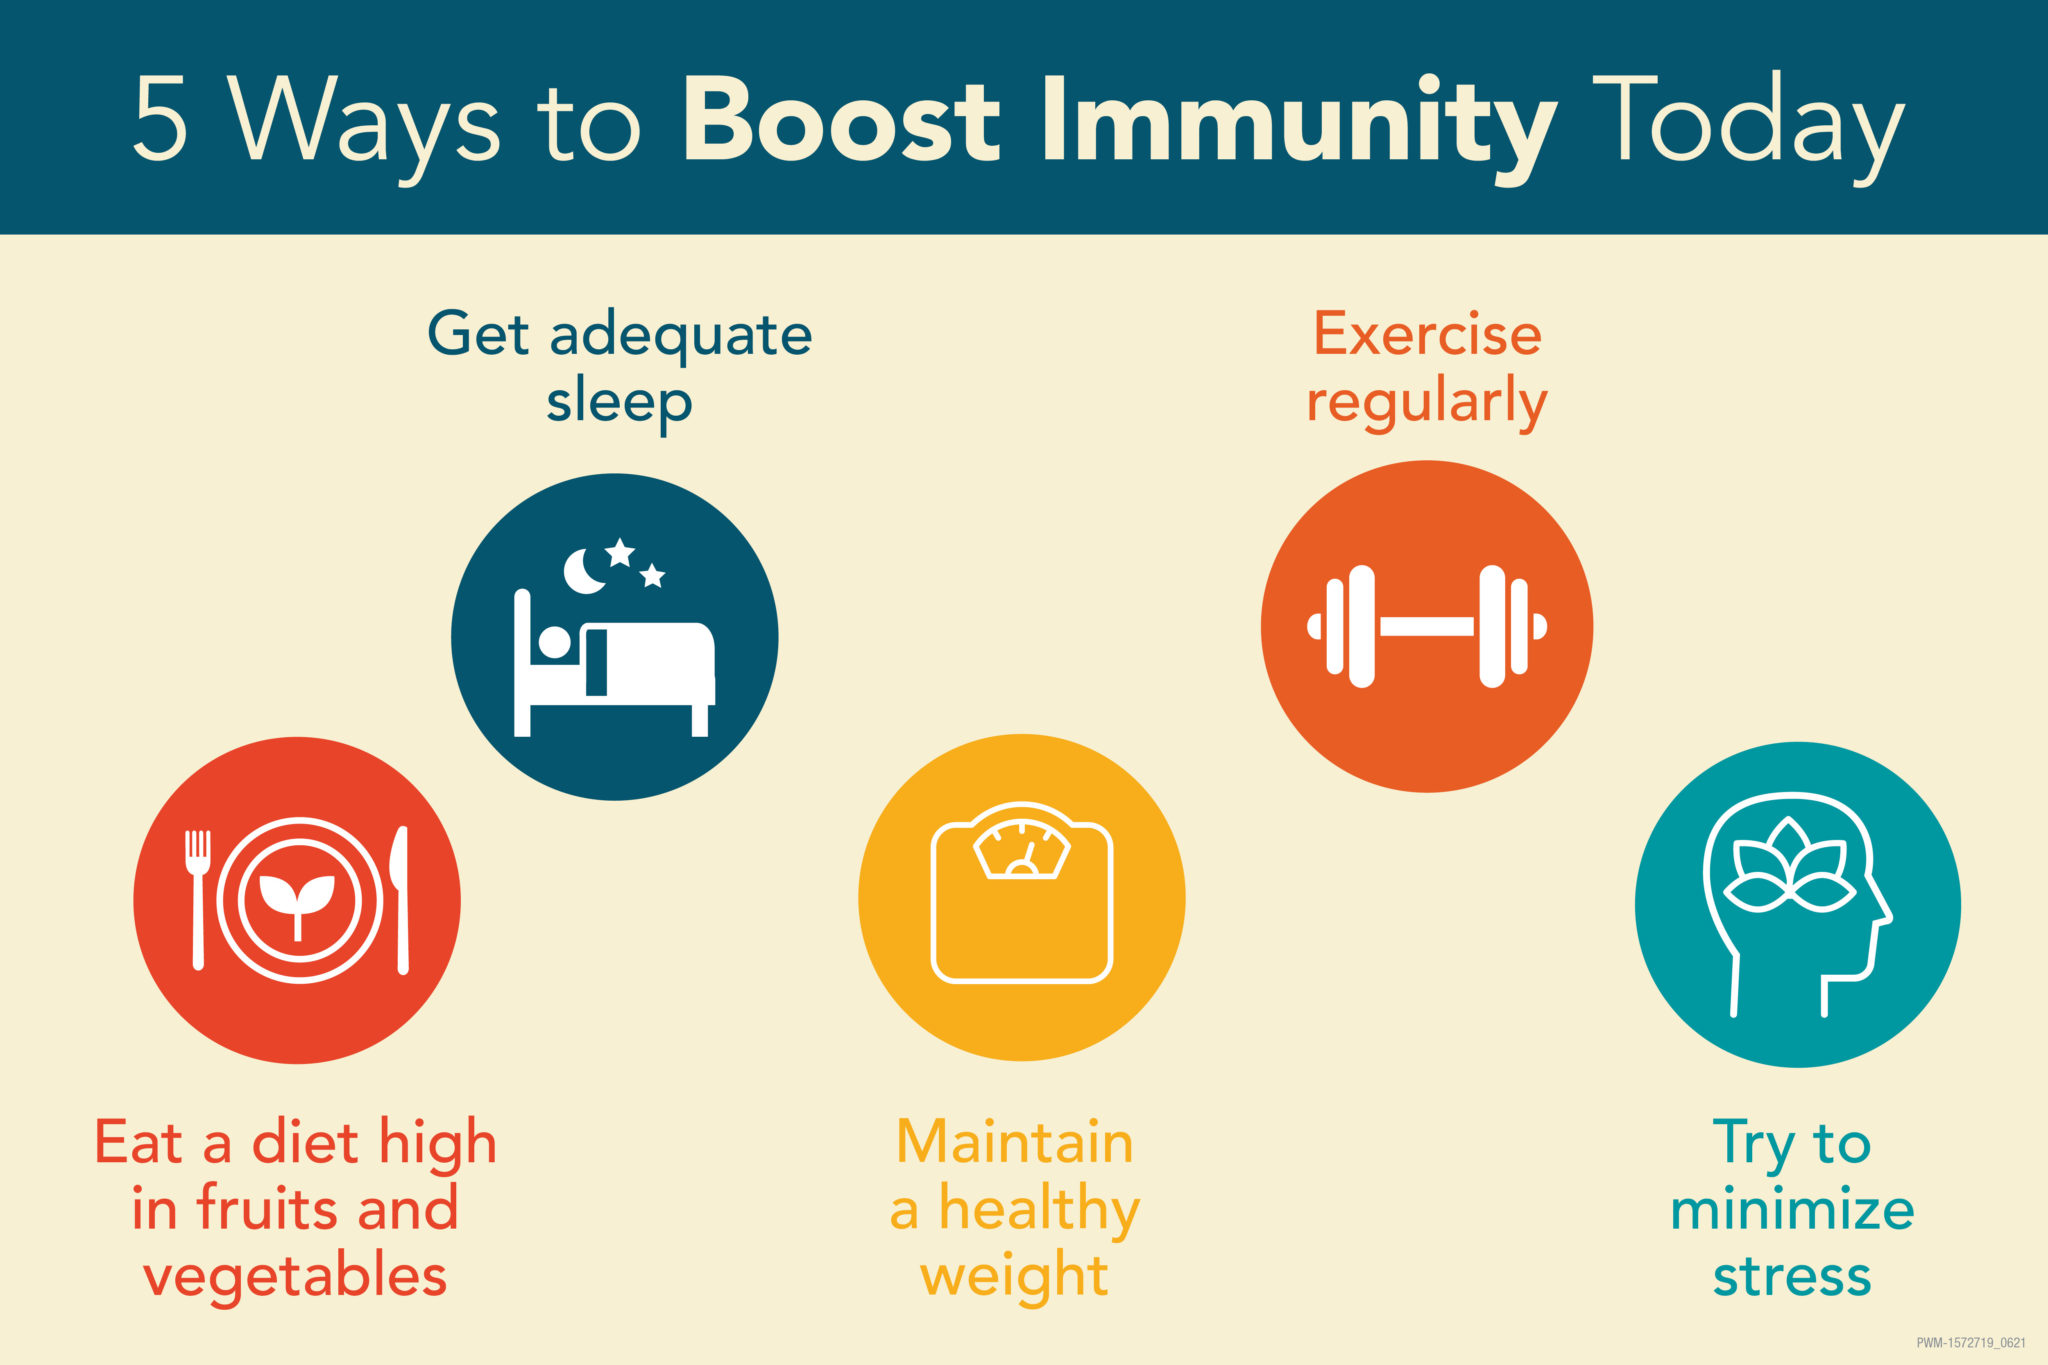 Immunity boosting tips